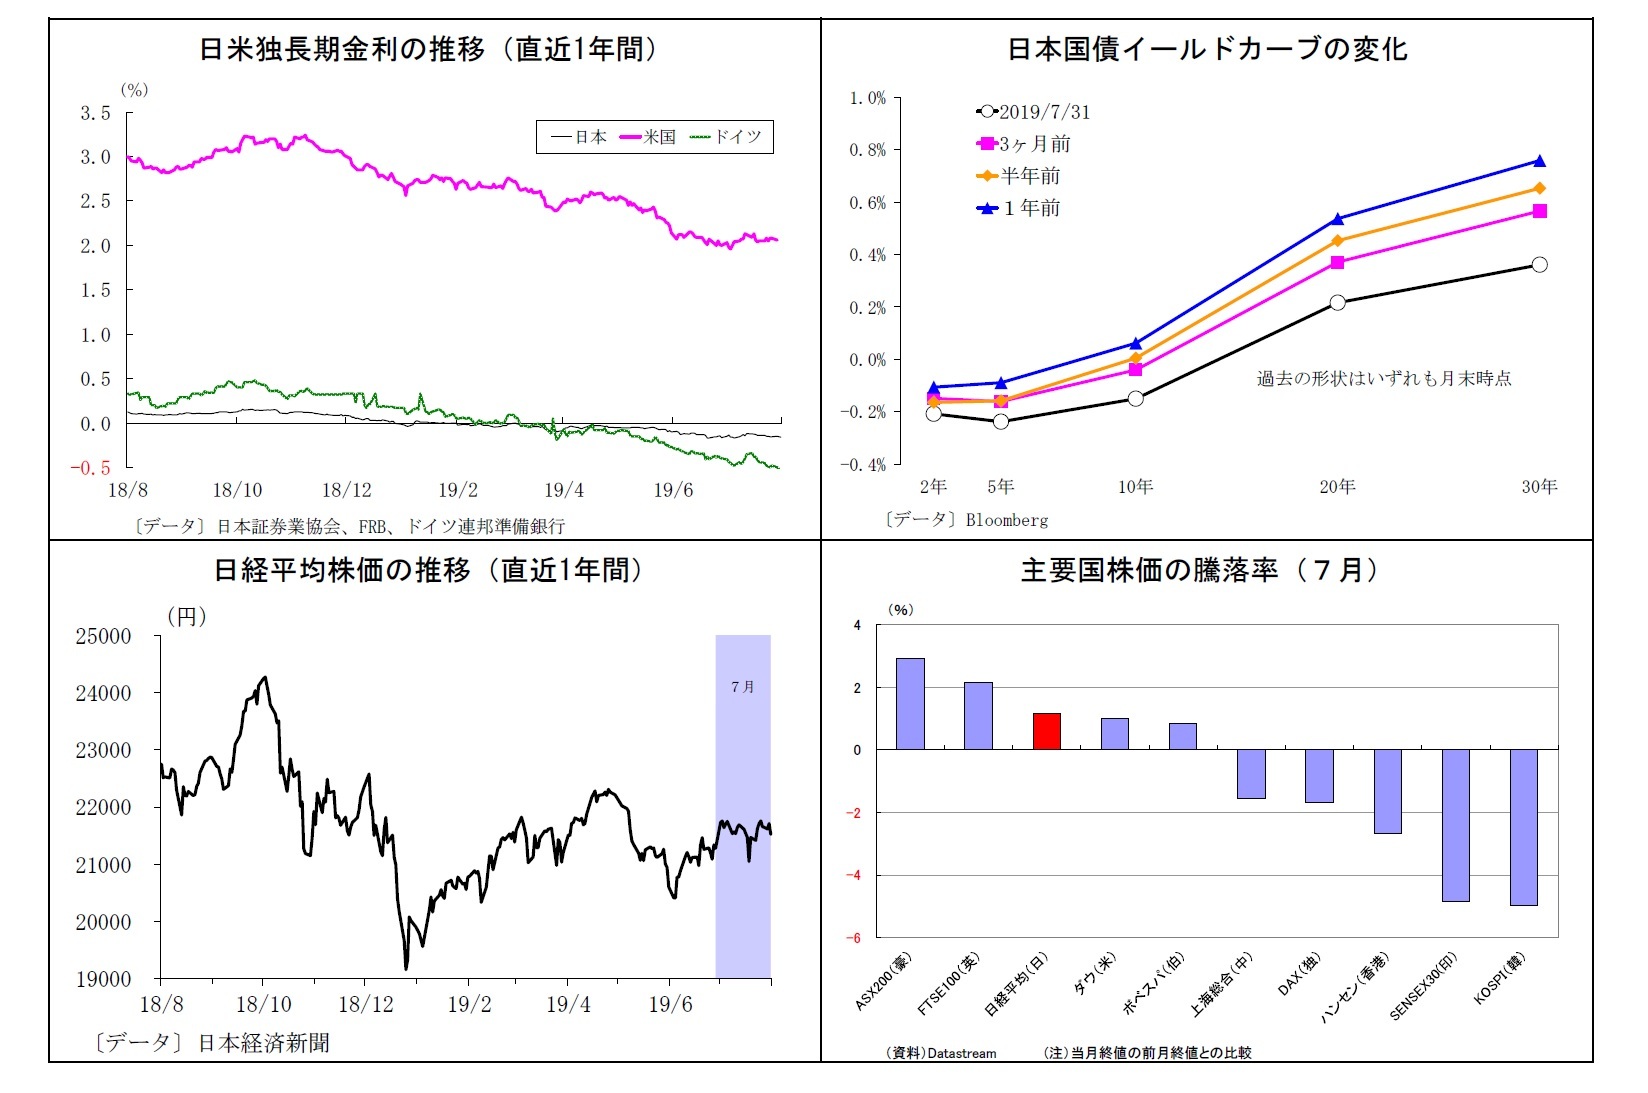 日米独長期金利の推移（直近1年間）/日本国債イールドカーブの変化/日経平均株価の推移（直近1年間）/主要国株価の騰落率（７月）